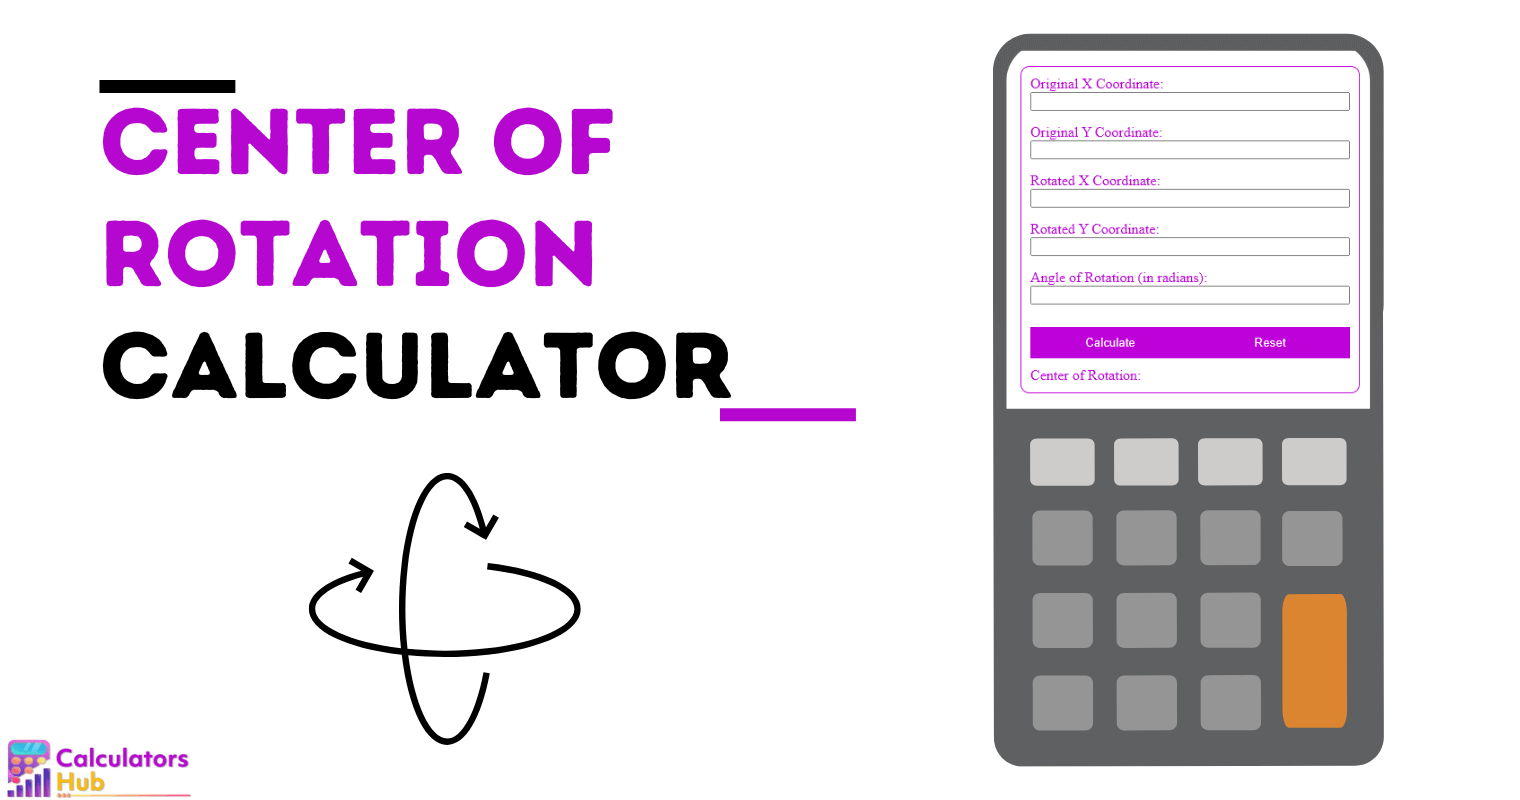 Center of Rotation Calculator